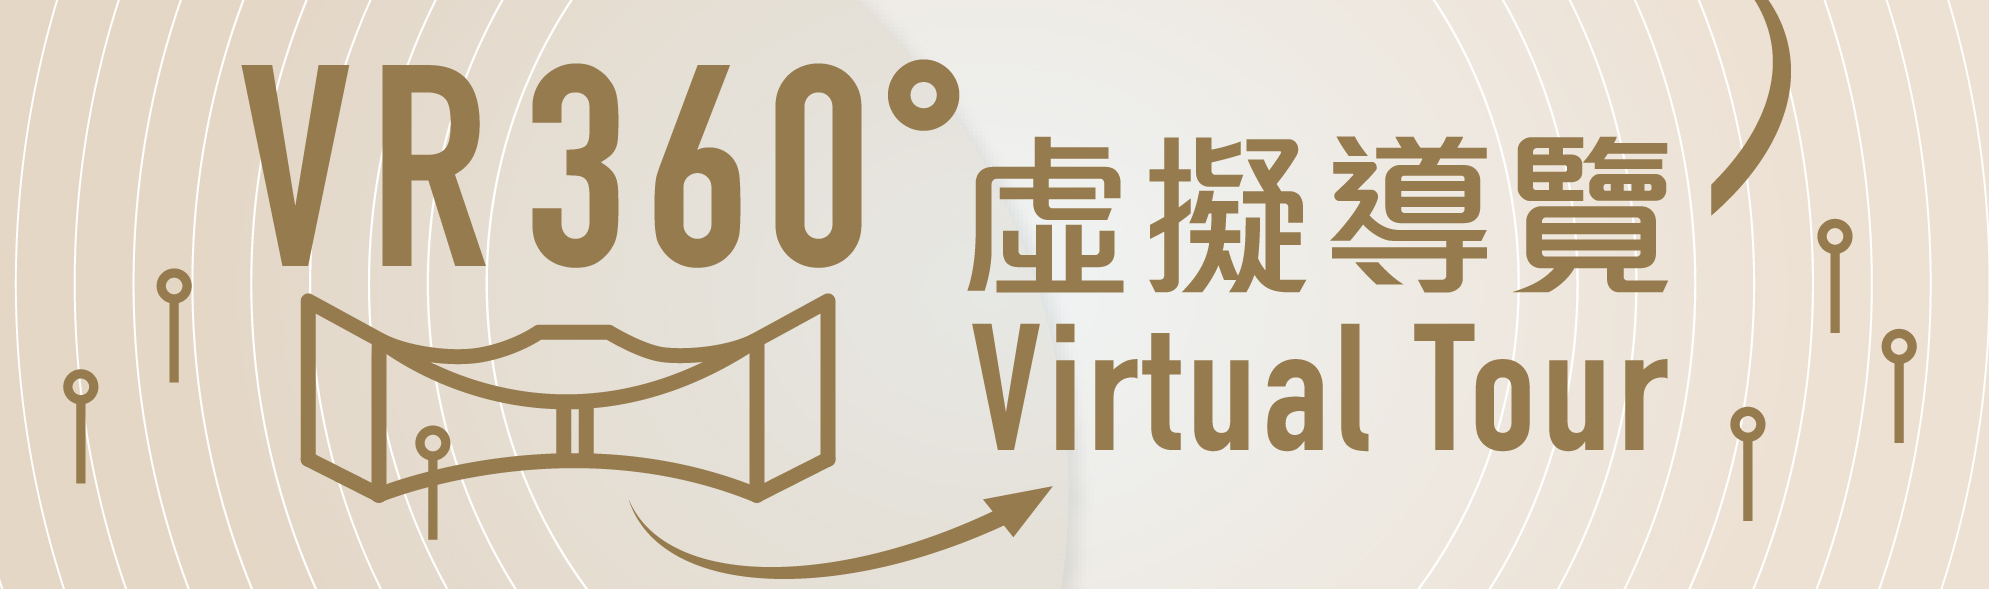 3-D Virtual Tour to HKCC Facilities